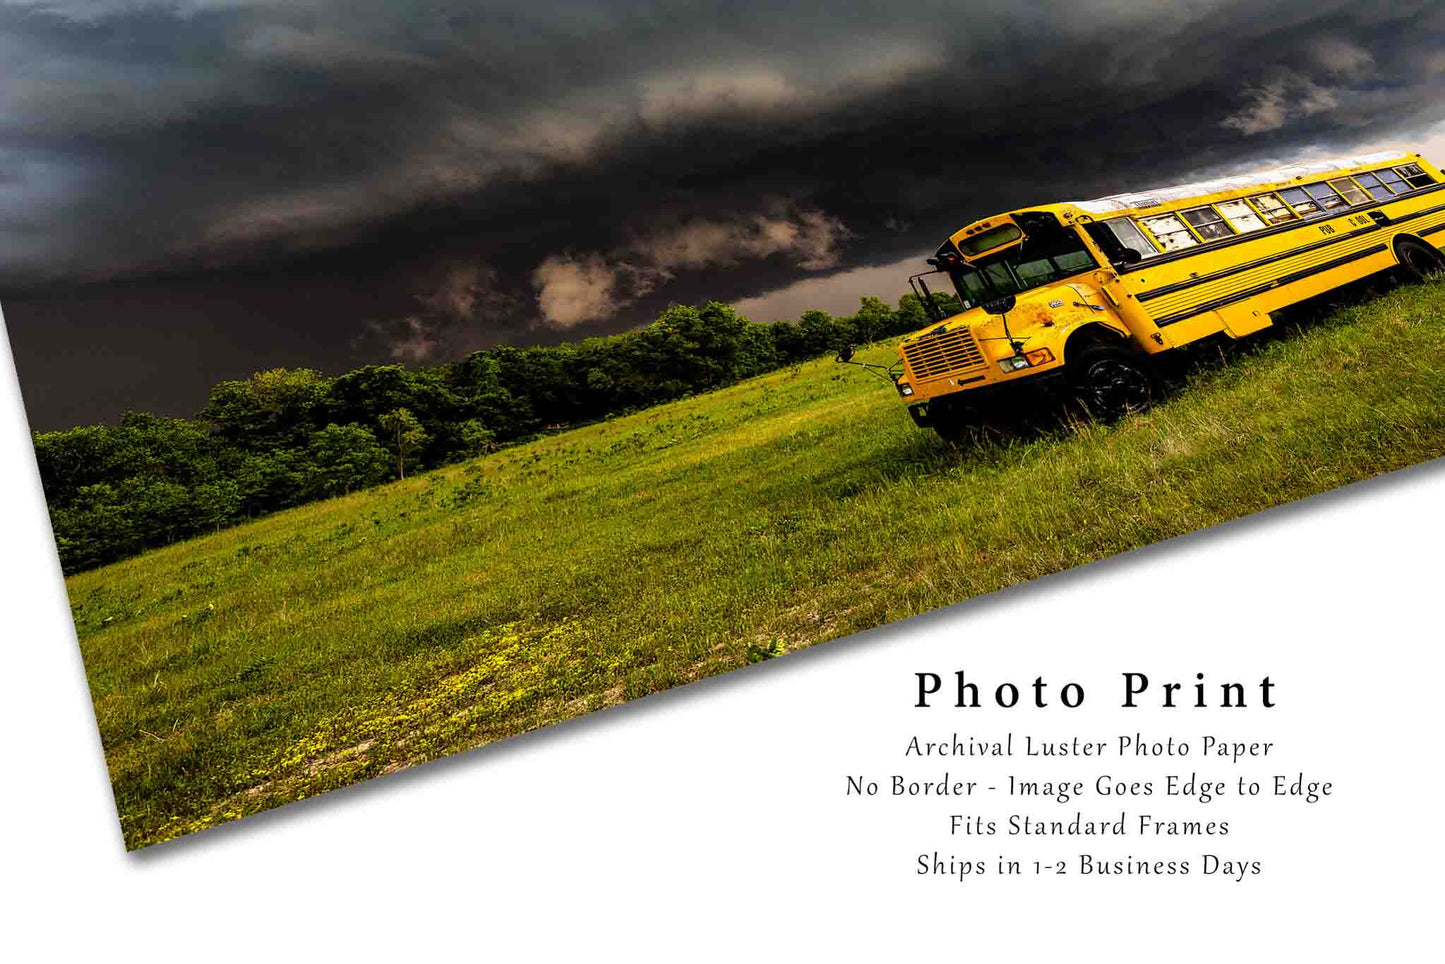 Storm Photo Print | Thunderstorm Over School Bus Picture | Oklahoma Wall Art | Transportation Photography | Classroom Decor